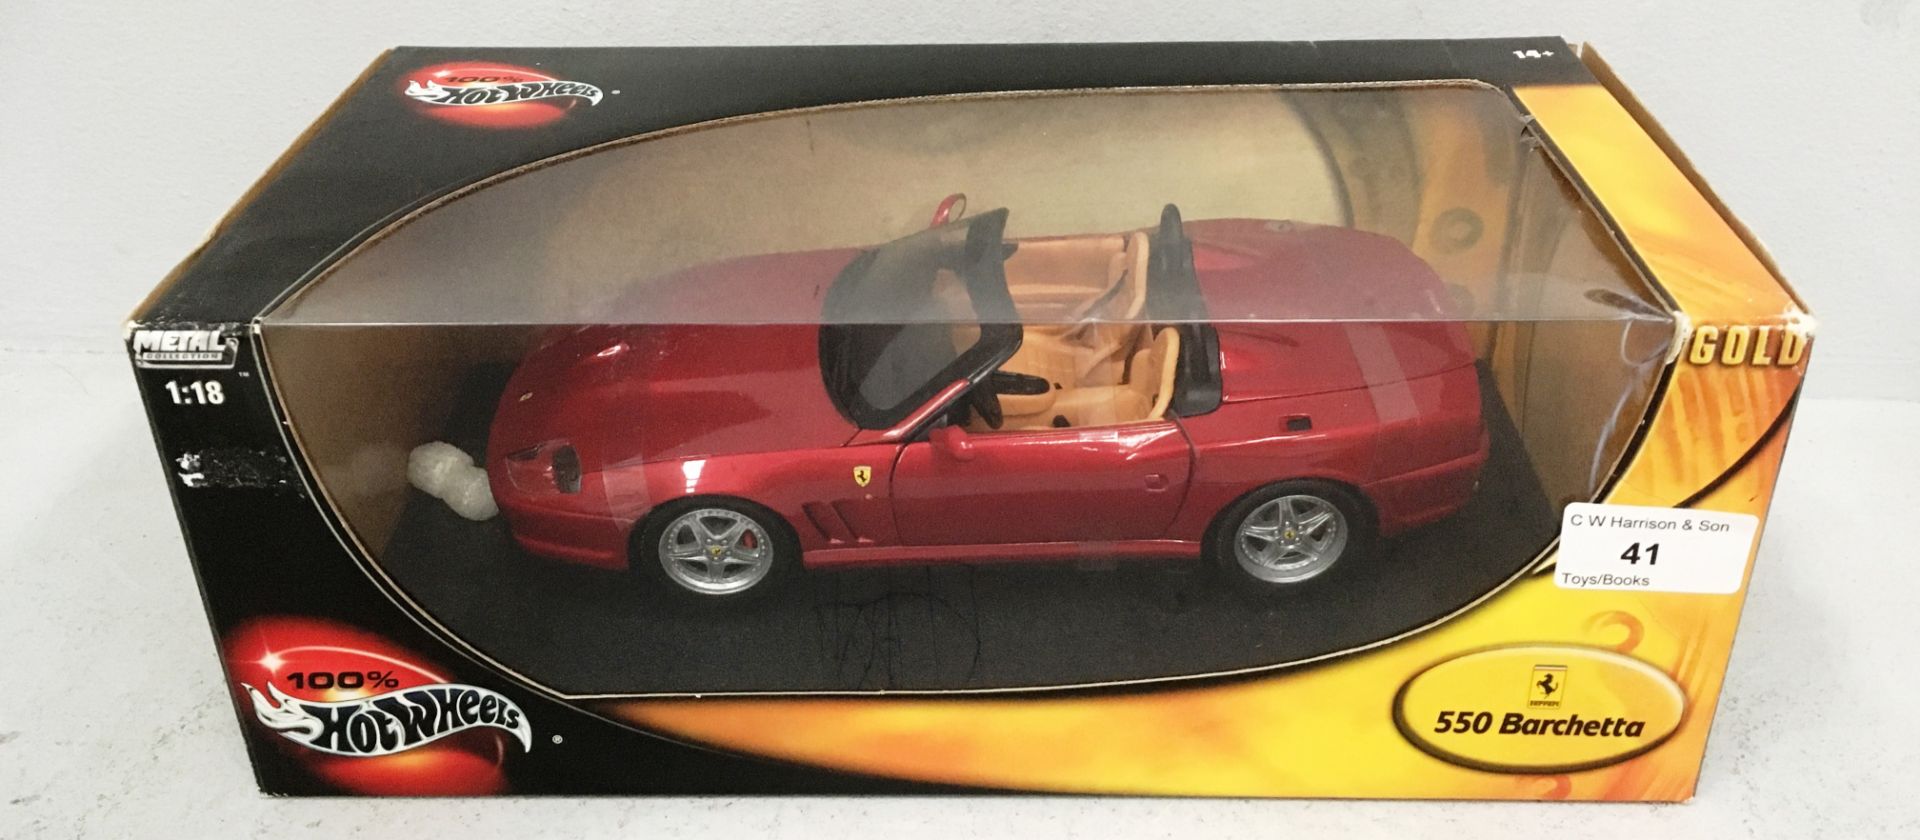 Hotwheels metal collection 1/18 scale die cast metal model of Ferrari 550 Barchetta (boxed)